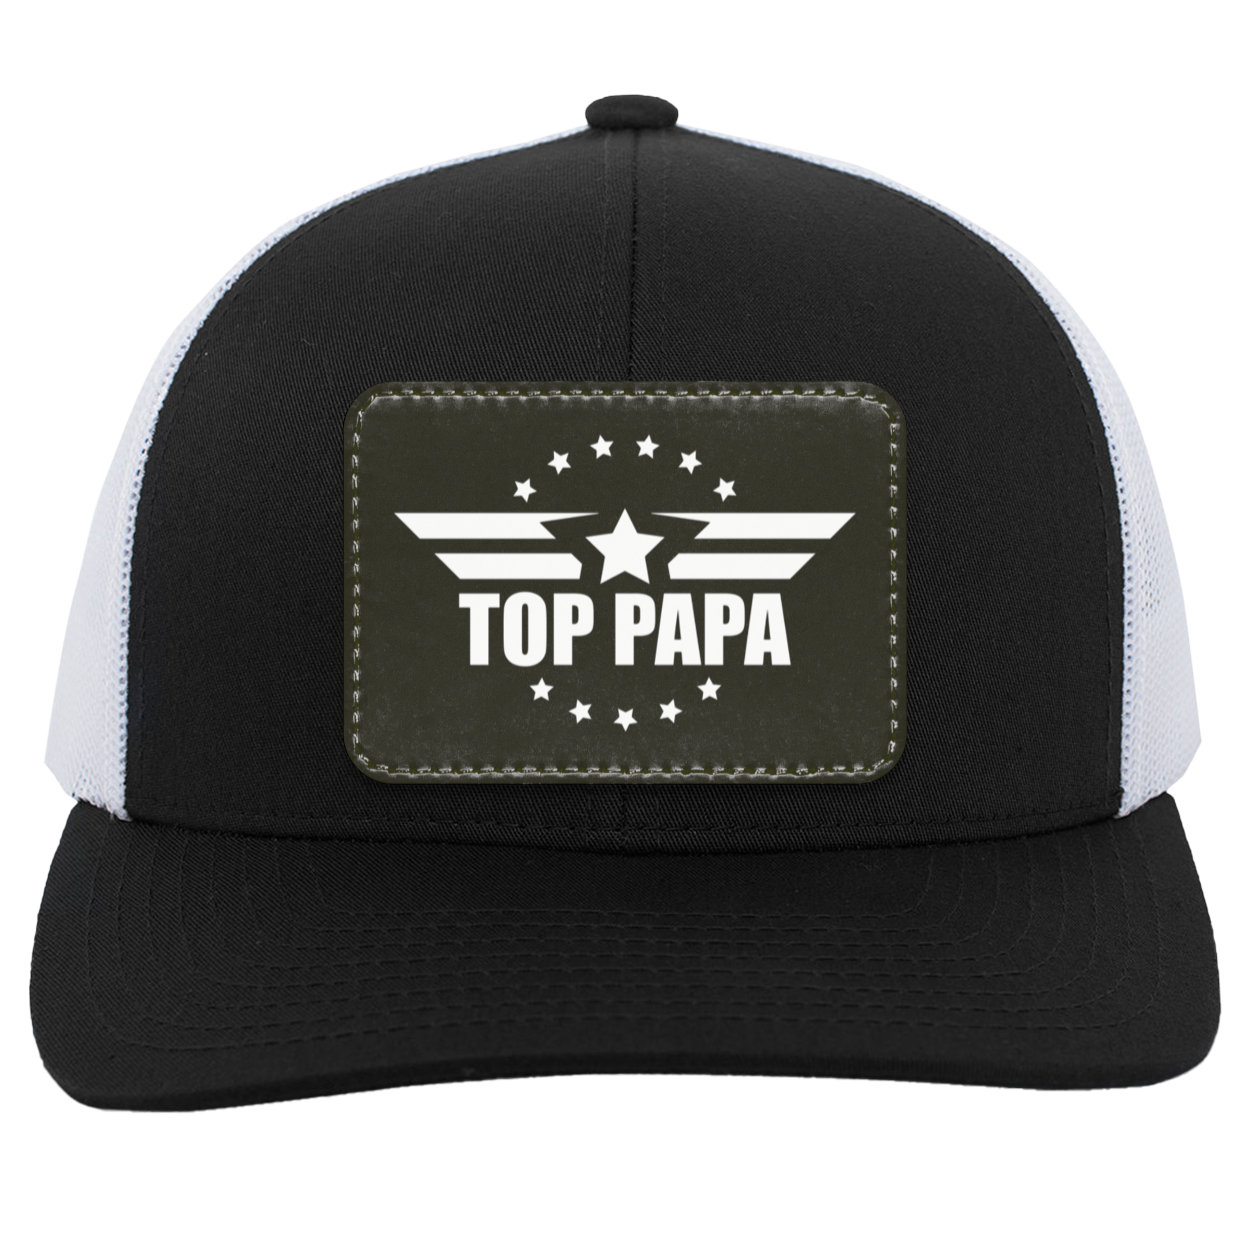 Top Papa Trucker Snap Back